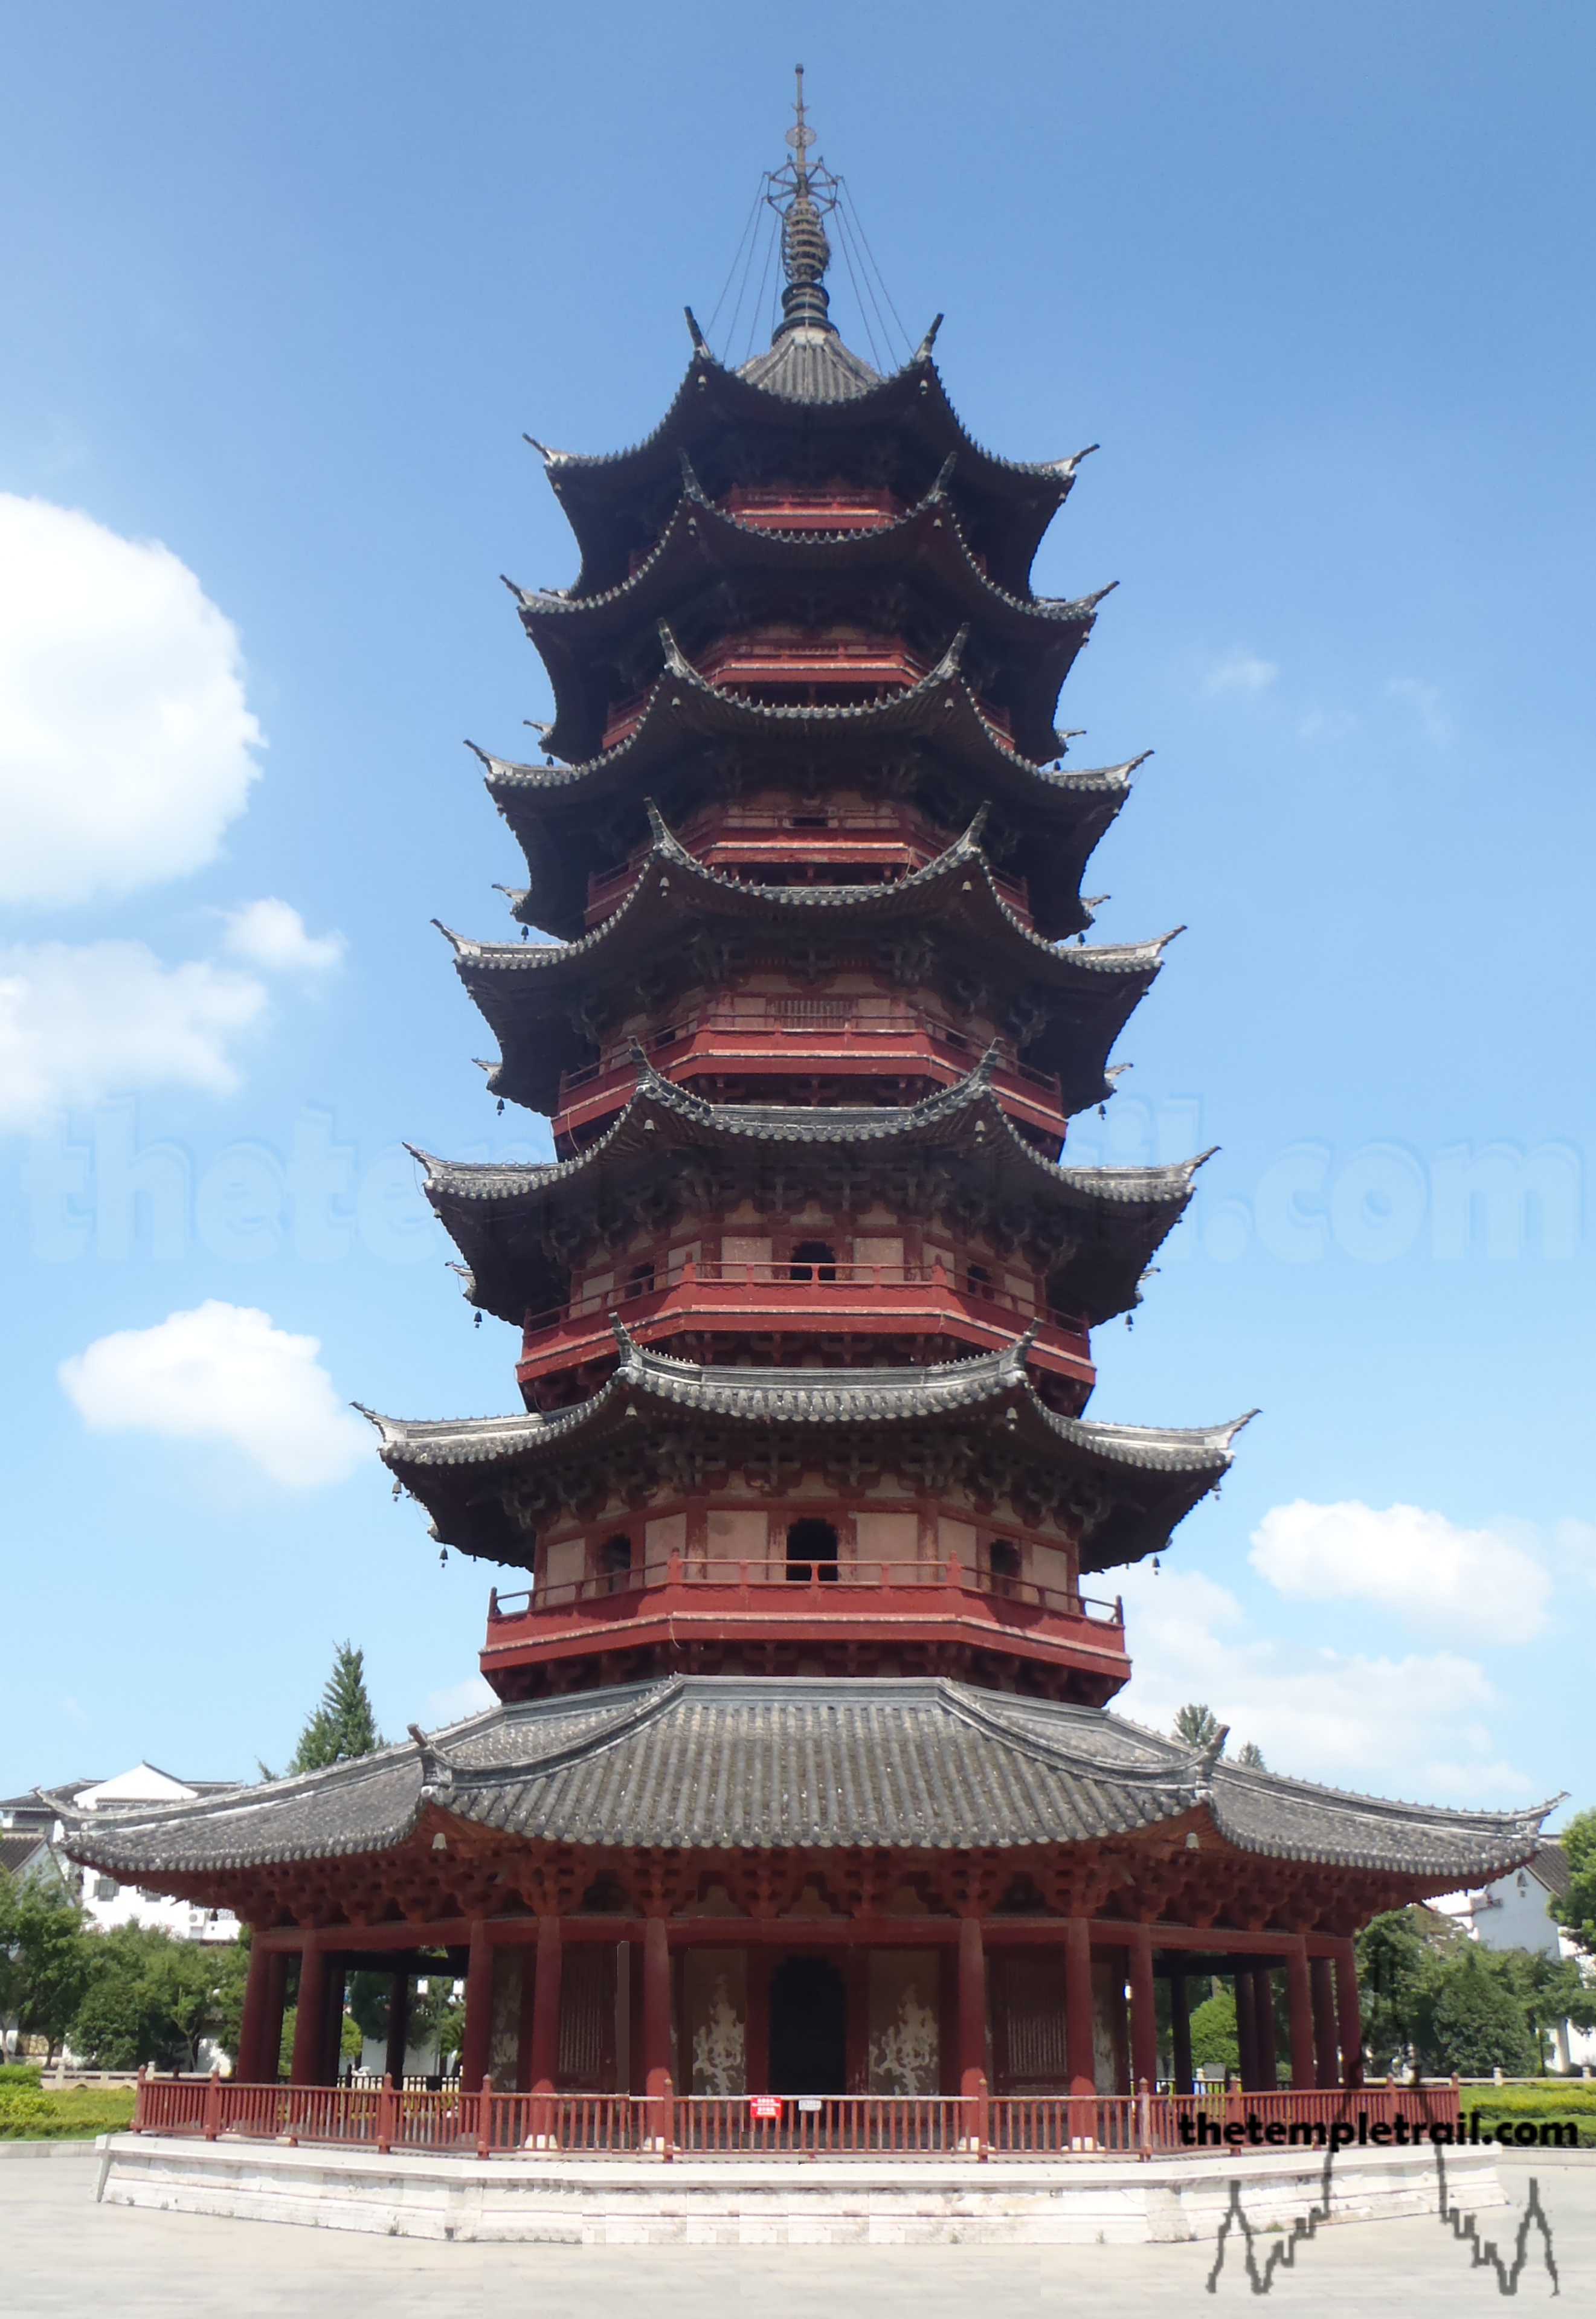 http://thetempletrail.com/wp-content/uploads/2013/03/Ruigang-Pagoda-Suzhou.jpg